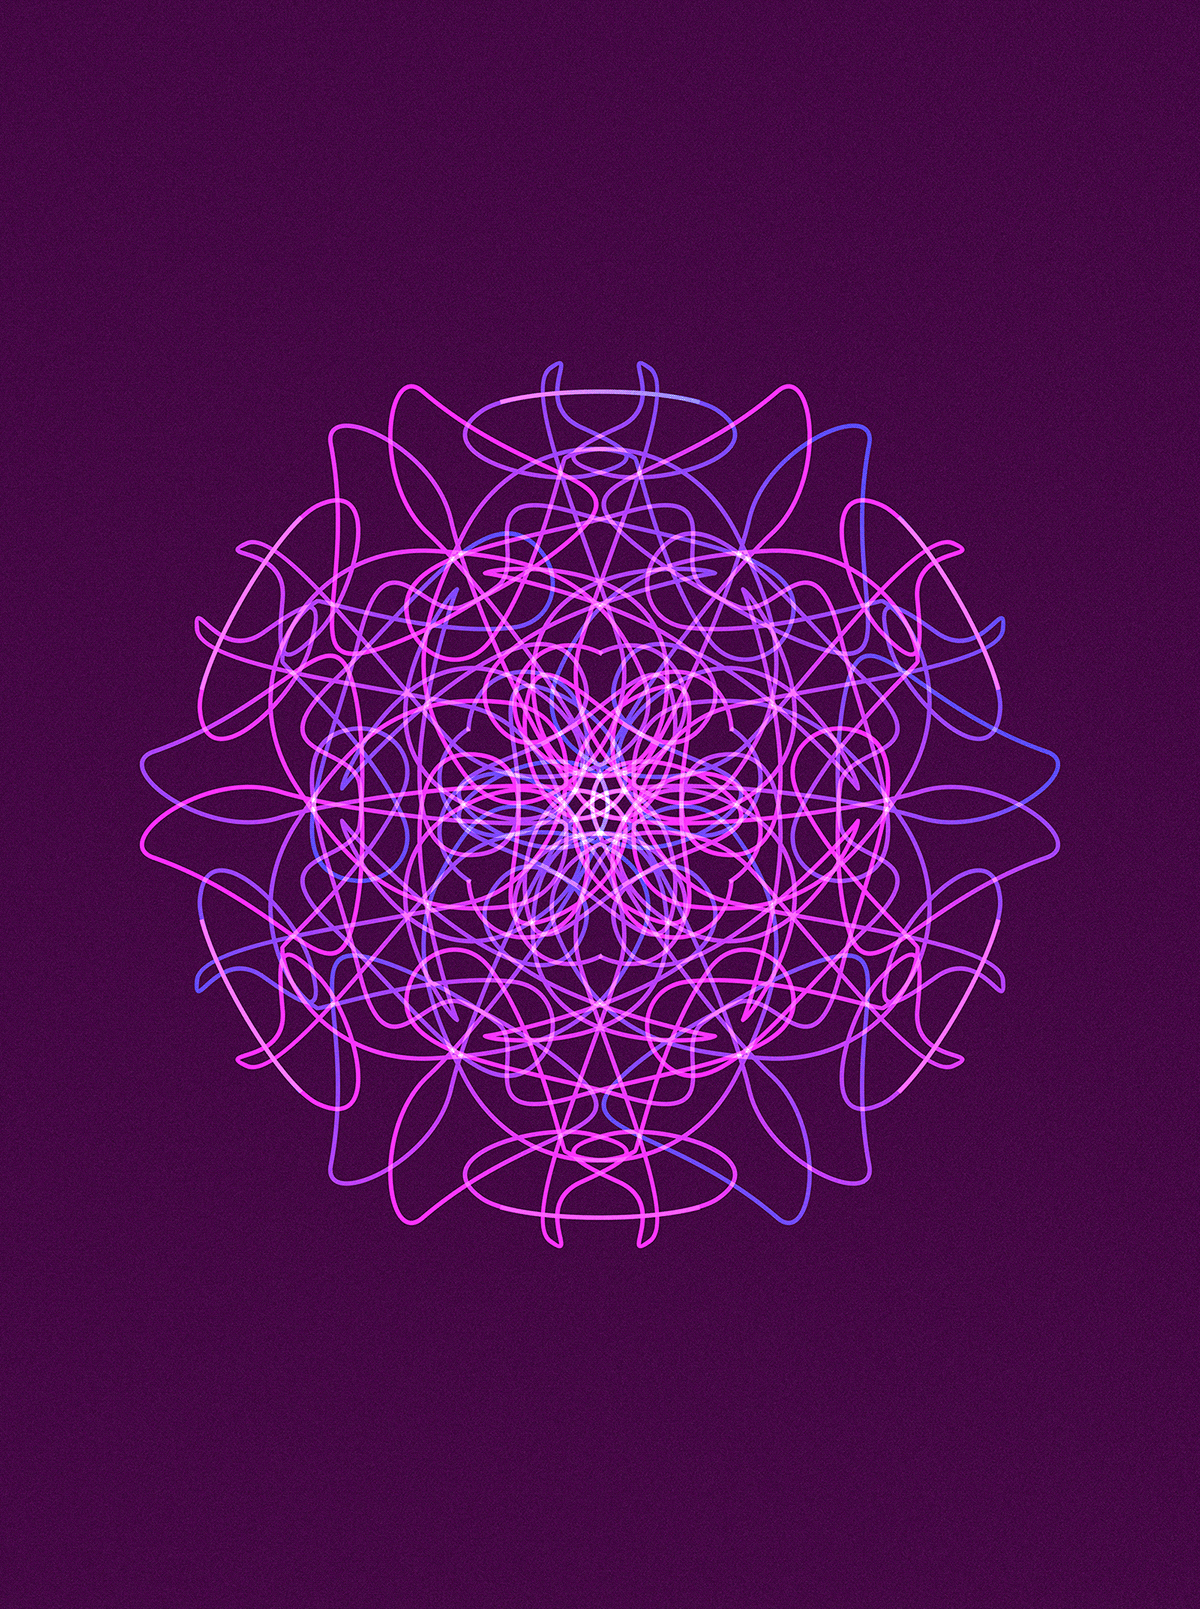 Mandala Art sacred geometry spirituality electric light relaxation meditation